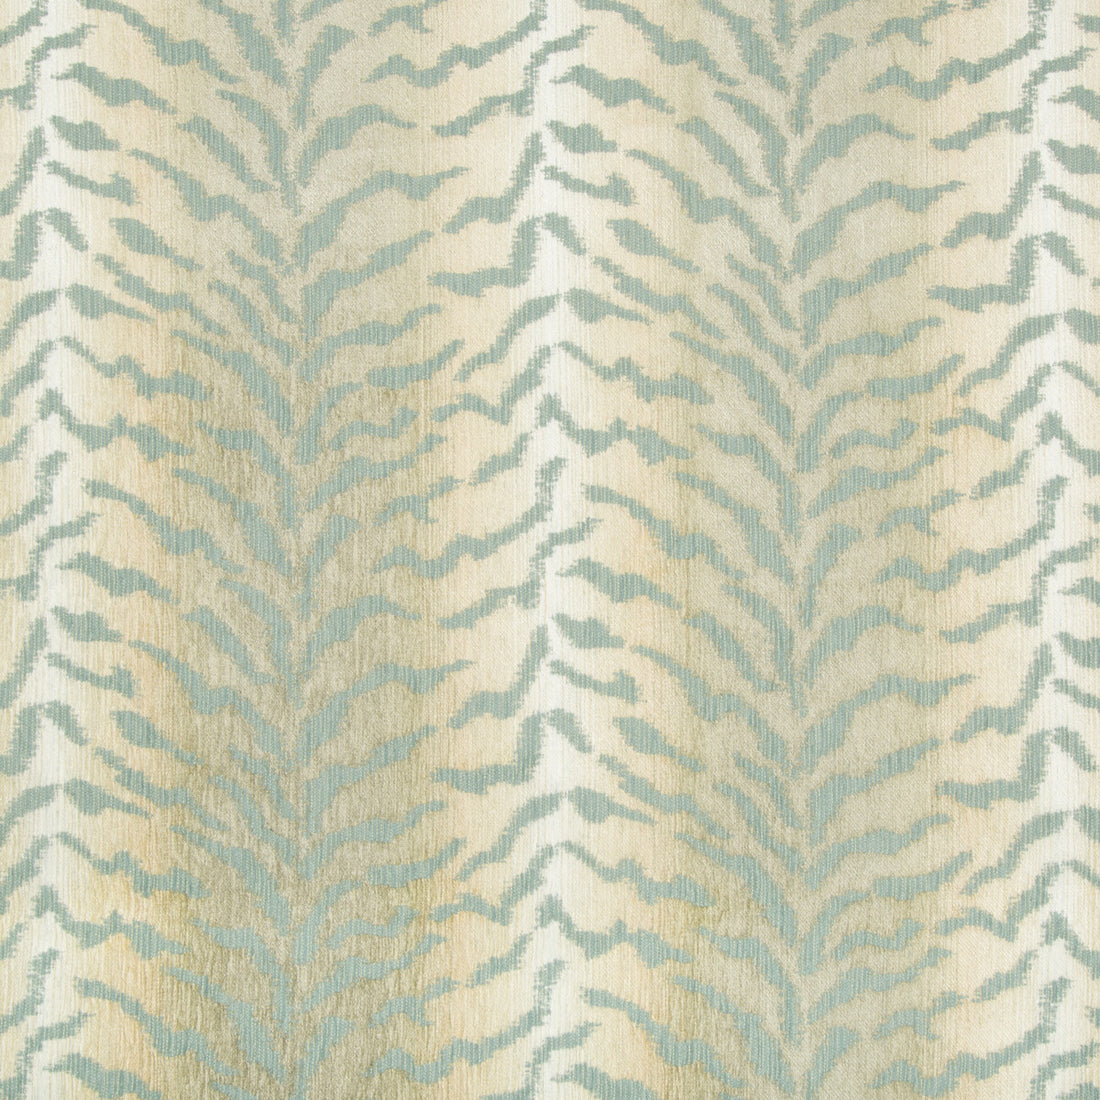 Kravet Design fabric in 34715-13 color - pattern 34715.13.0 - by Kravet Design in the Gis collection